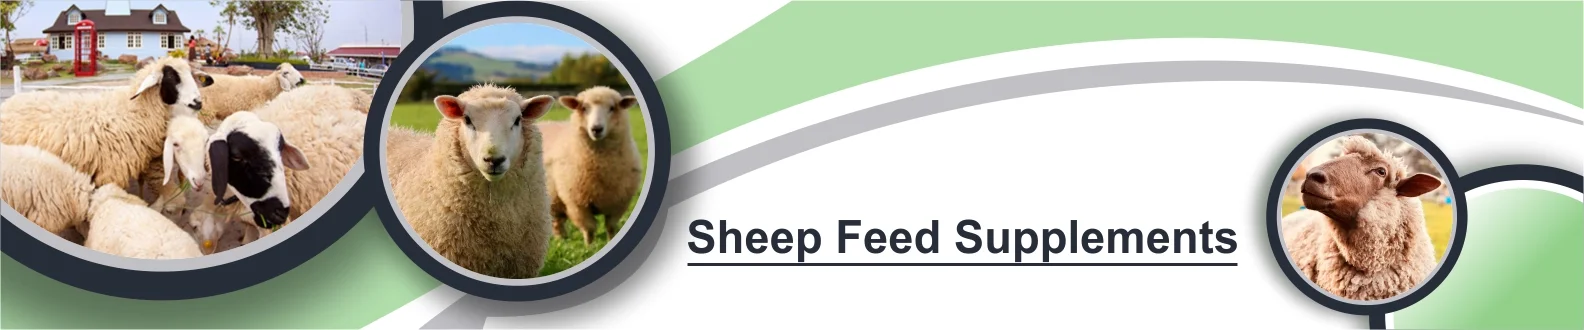 sheep-banner-image